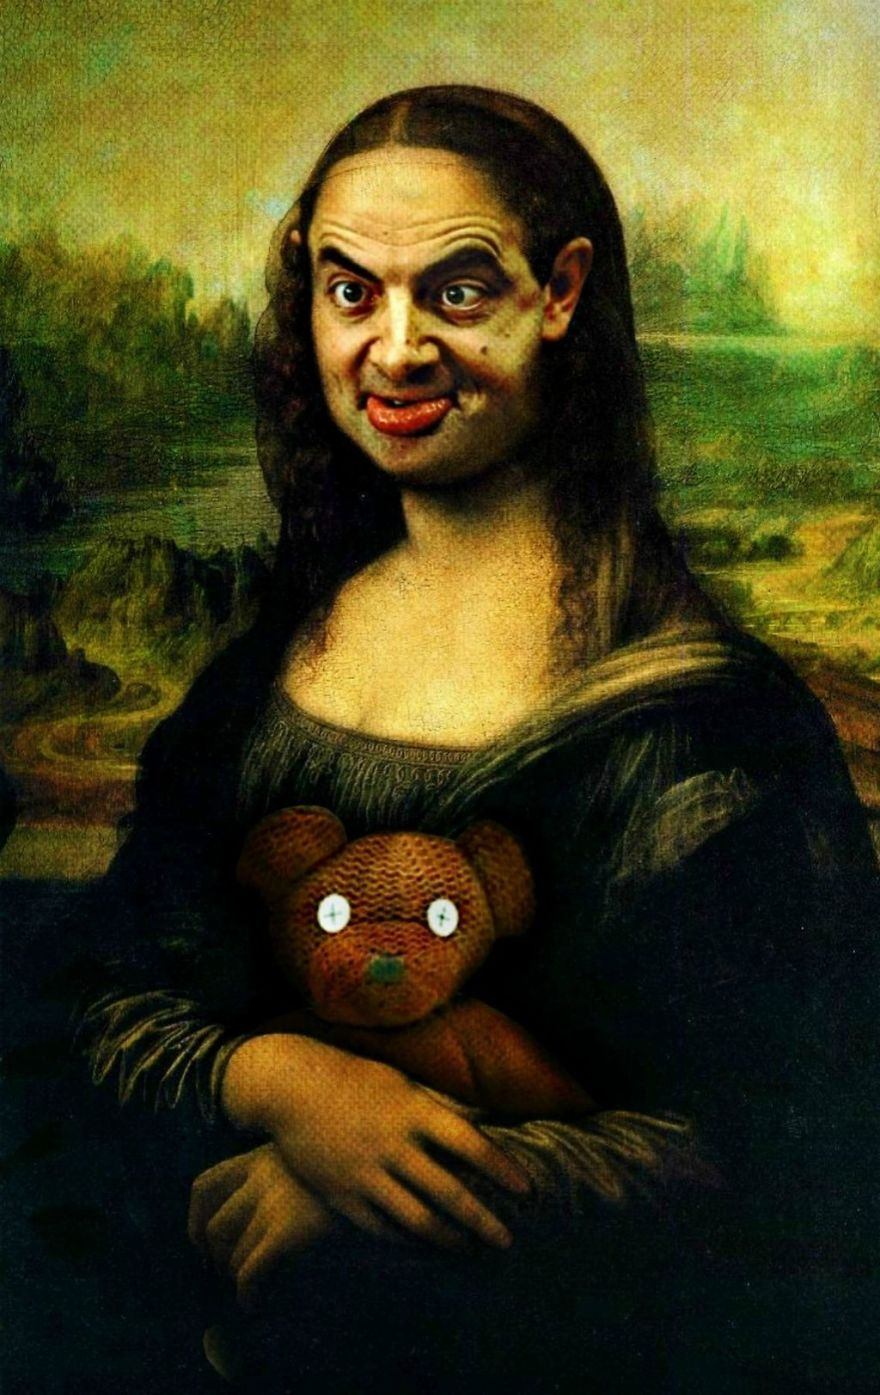 Mr. Bean Photoshop Mağduru Oldu! 1